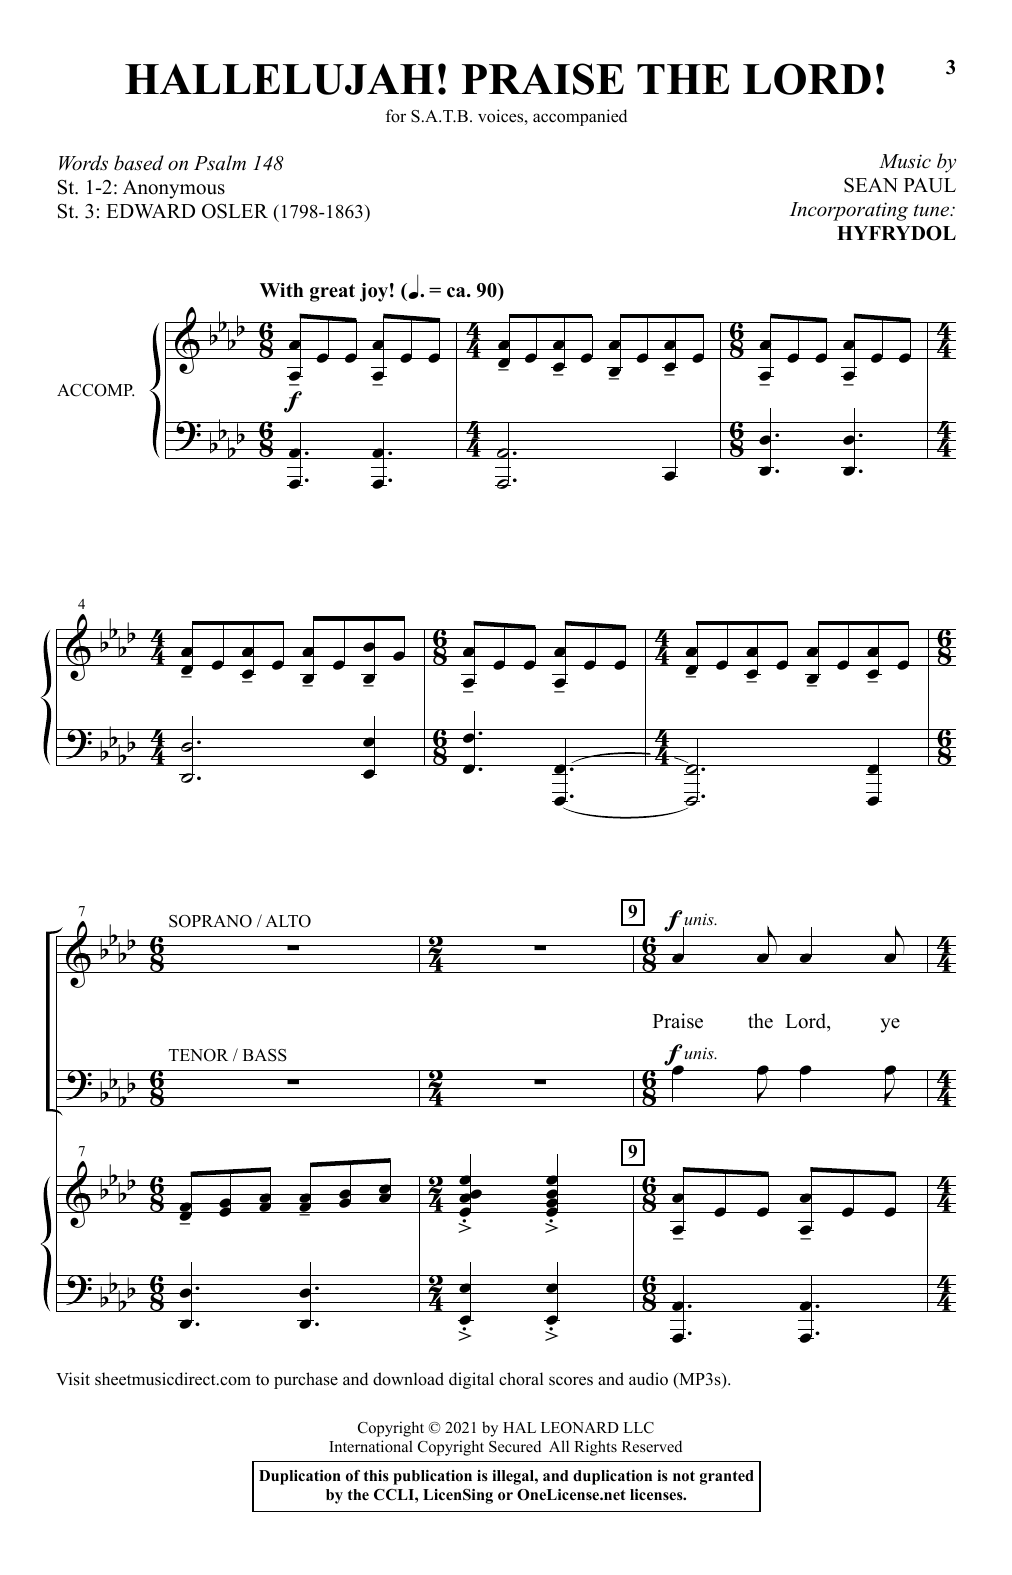 Sean Paul Hallelujah! Praise The Lord! sheet music notes and chords arranged for SATB Choir